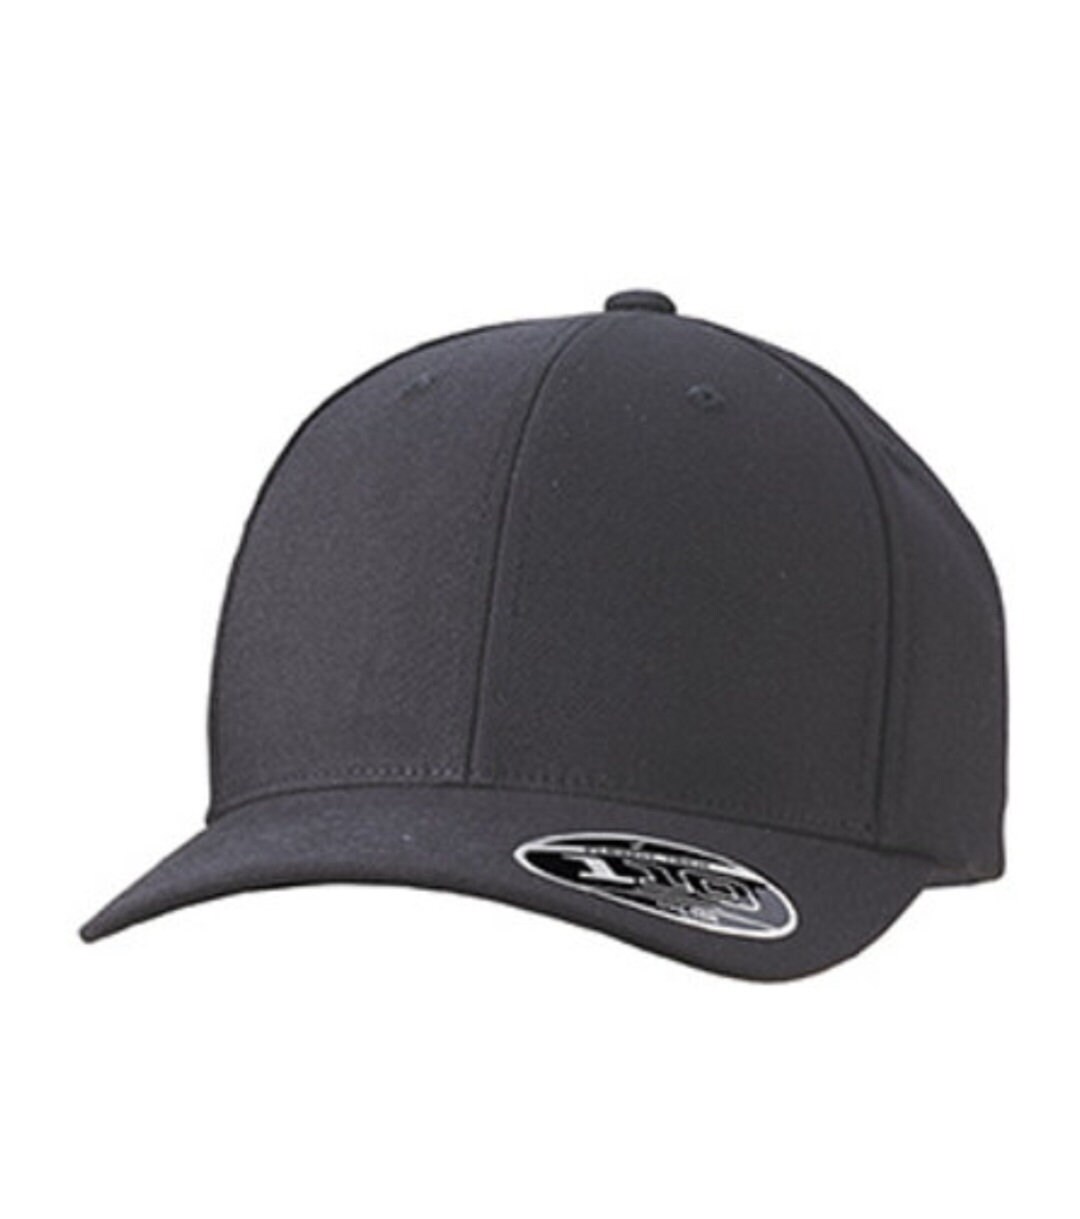 Proformance Flex-fit Hat With Leatherette Patch - Etsy